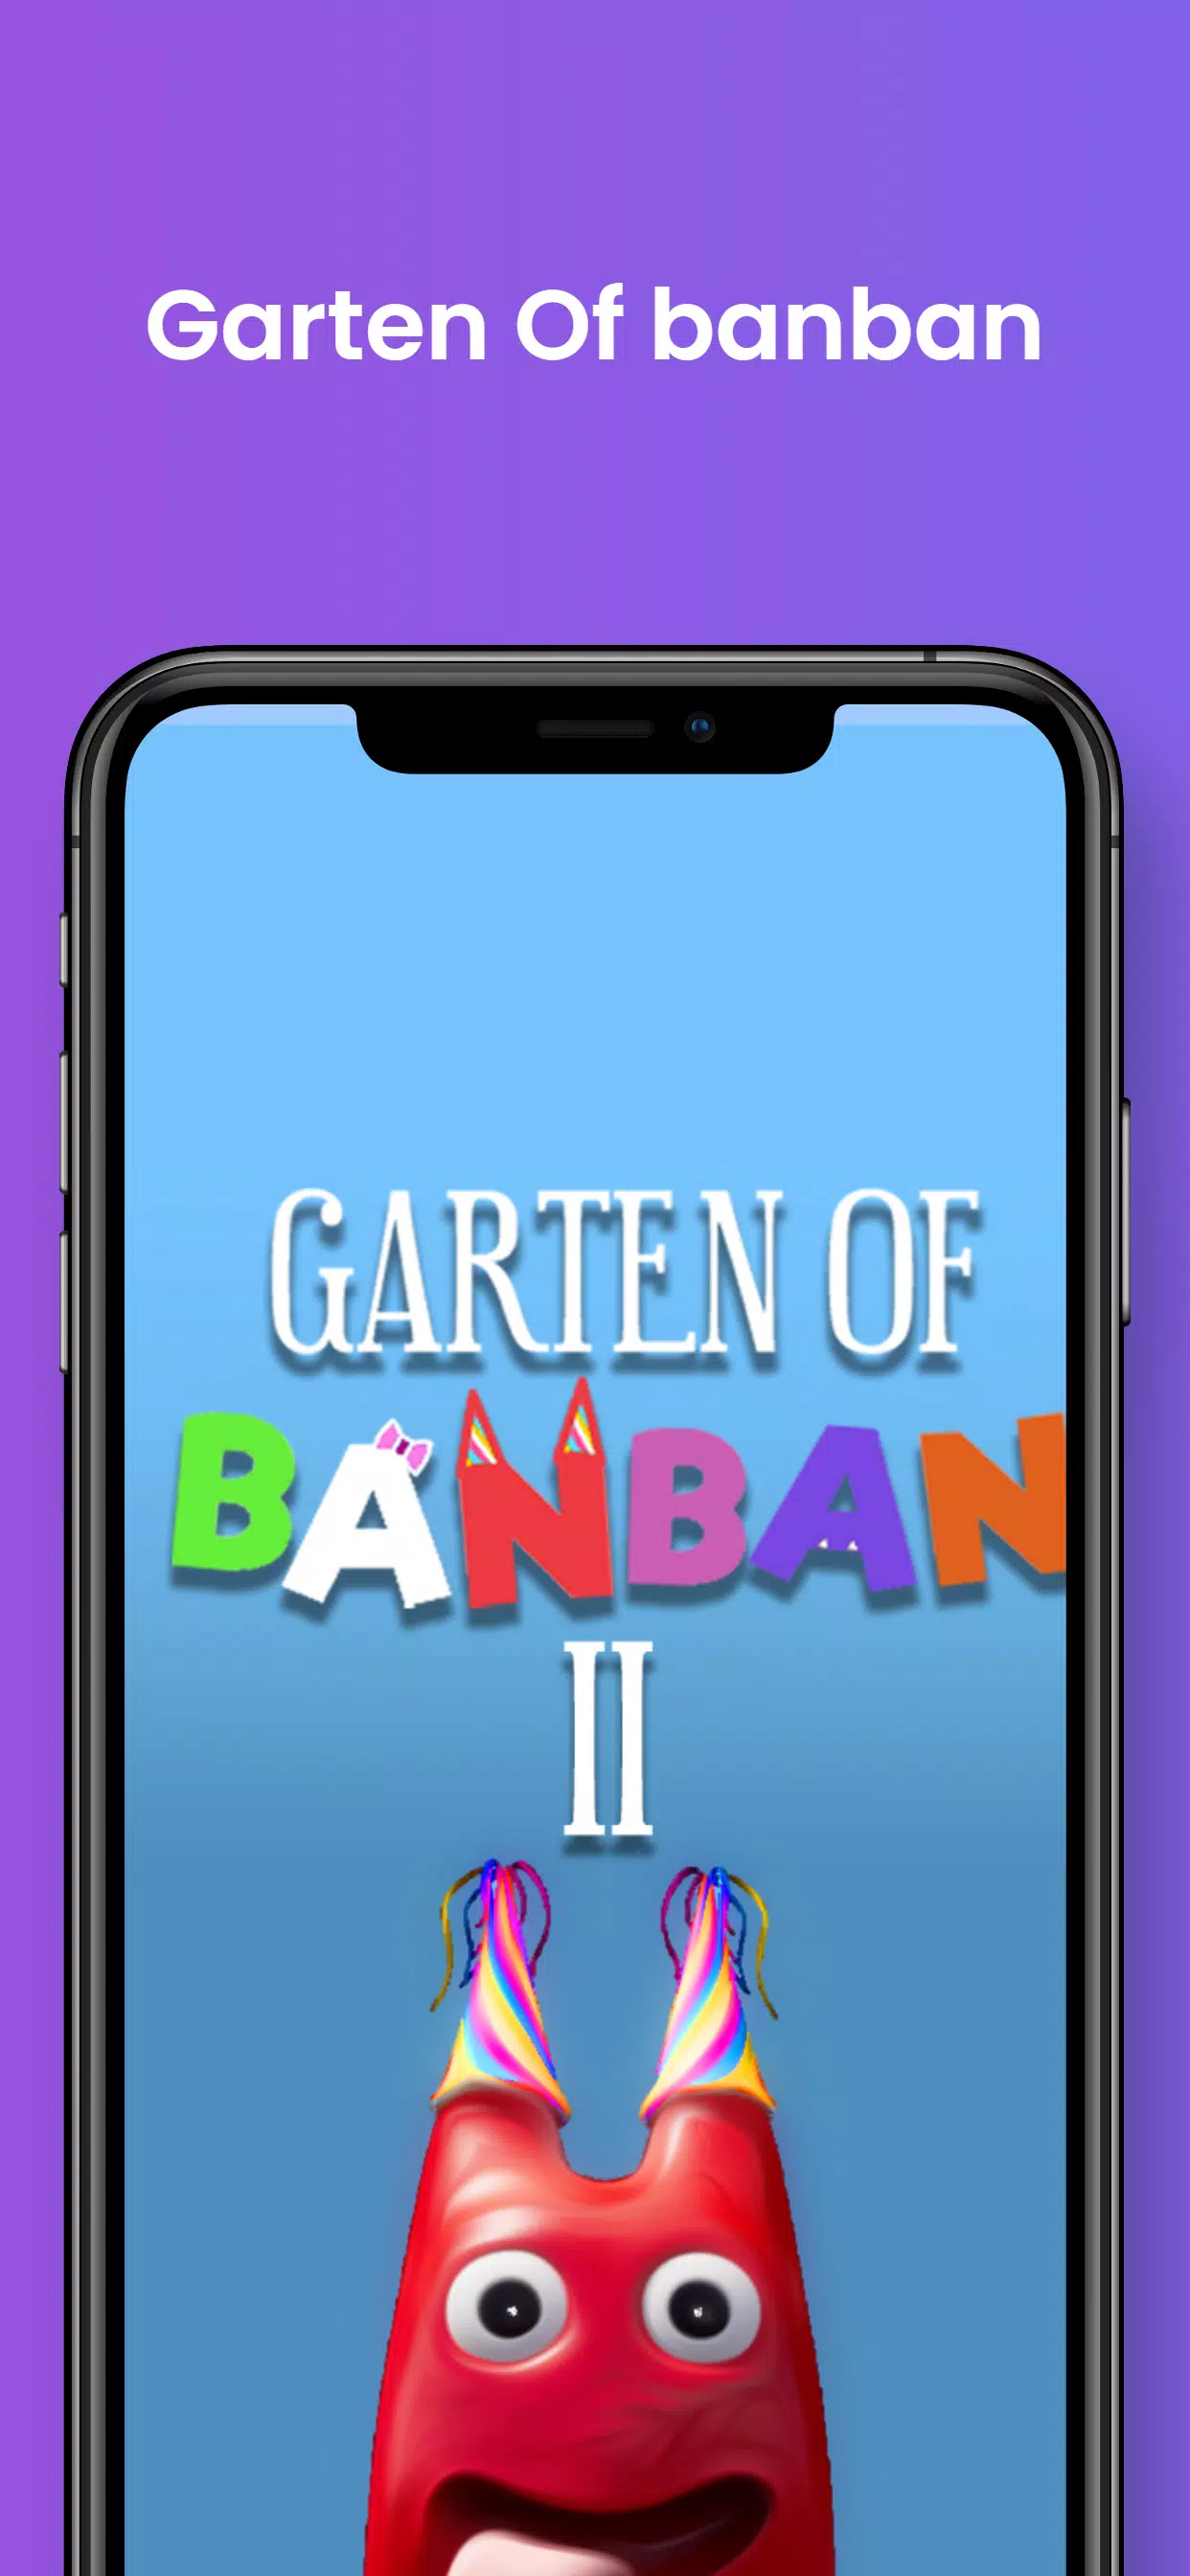 jumbo josh of banban for Android - Download